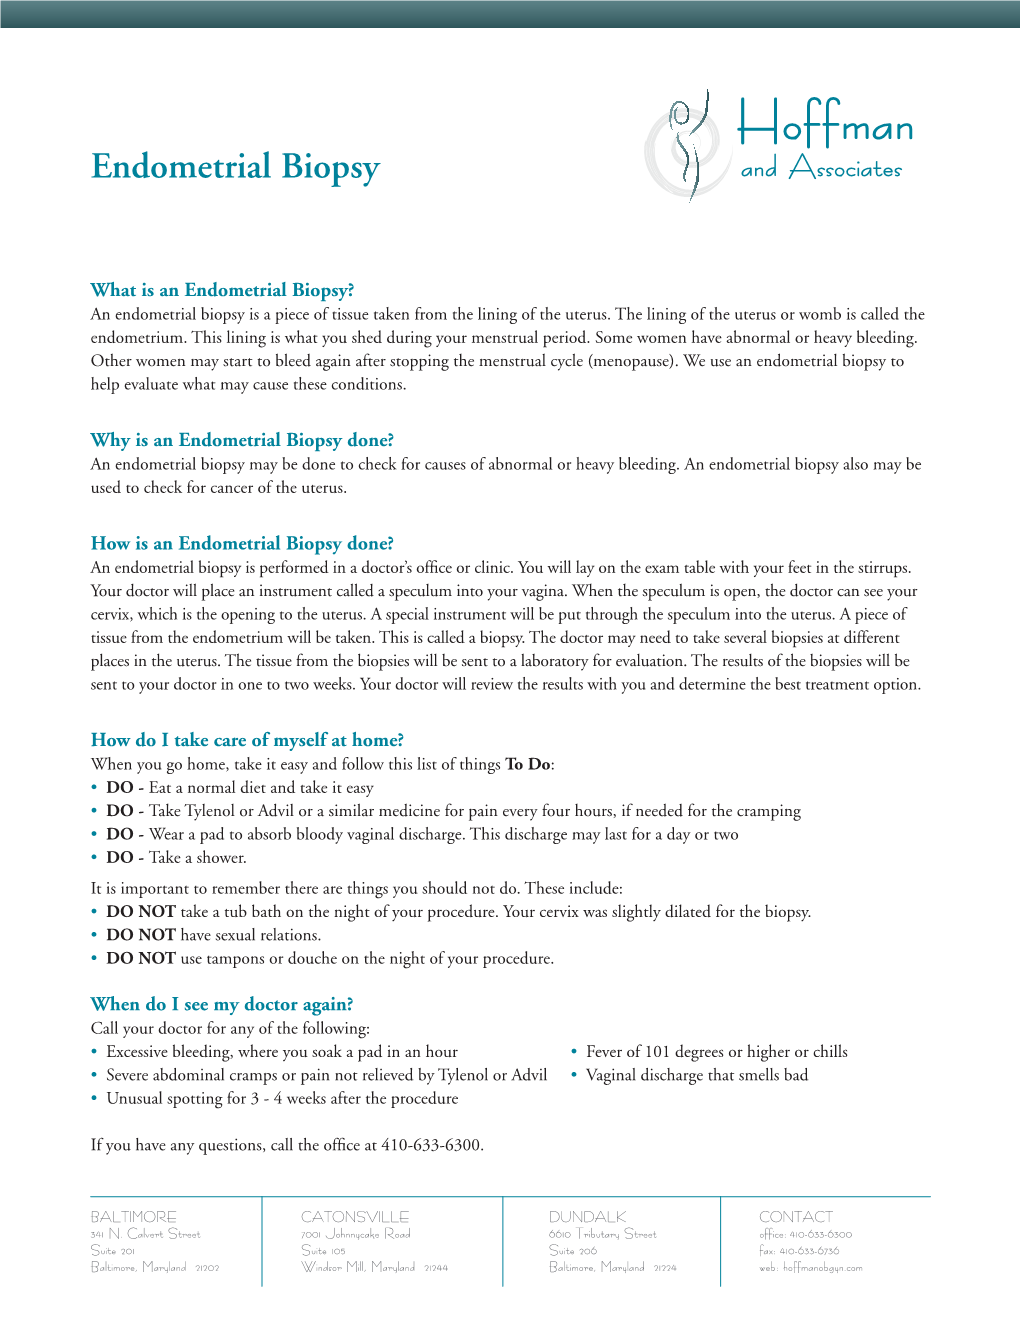 About Endometrial Biopsy